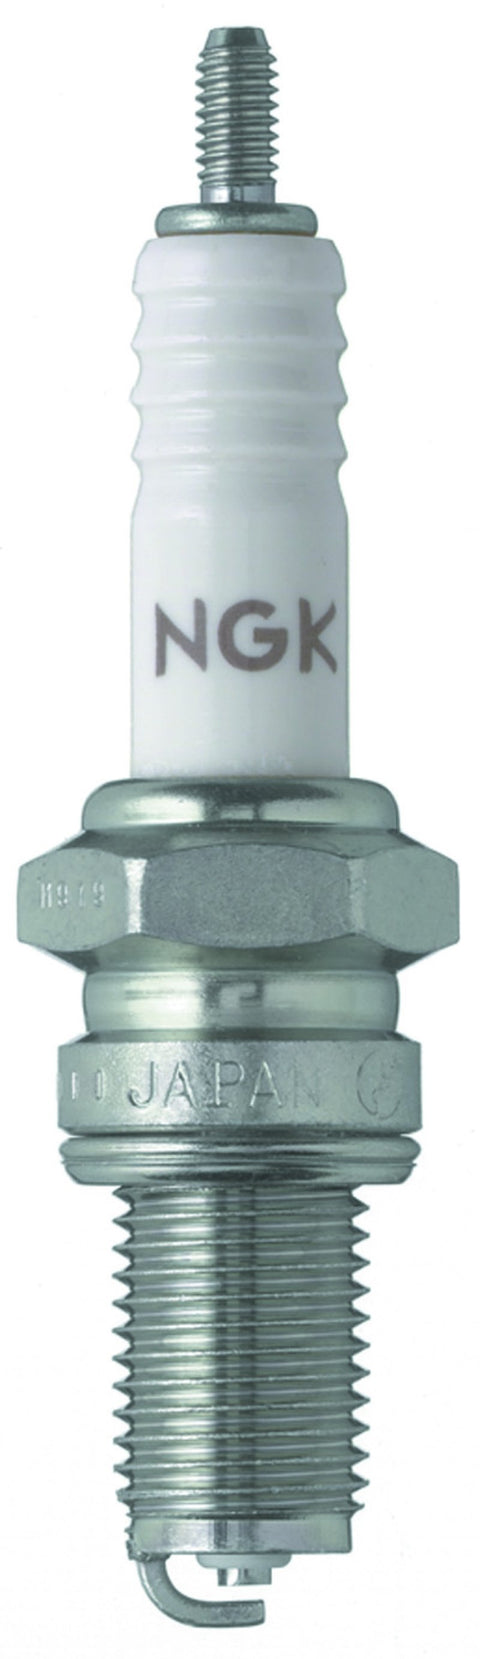 NGK Standard Spark Plug Box of 10 (2420)